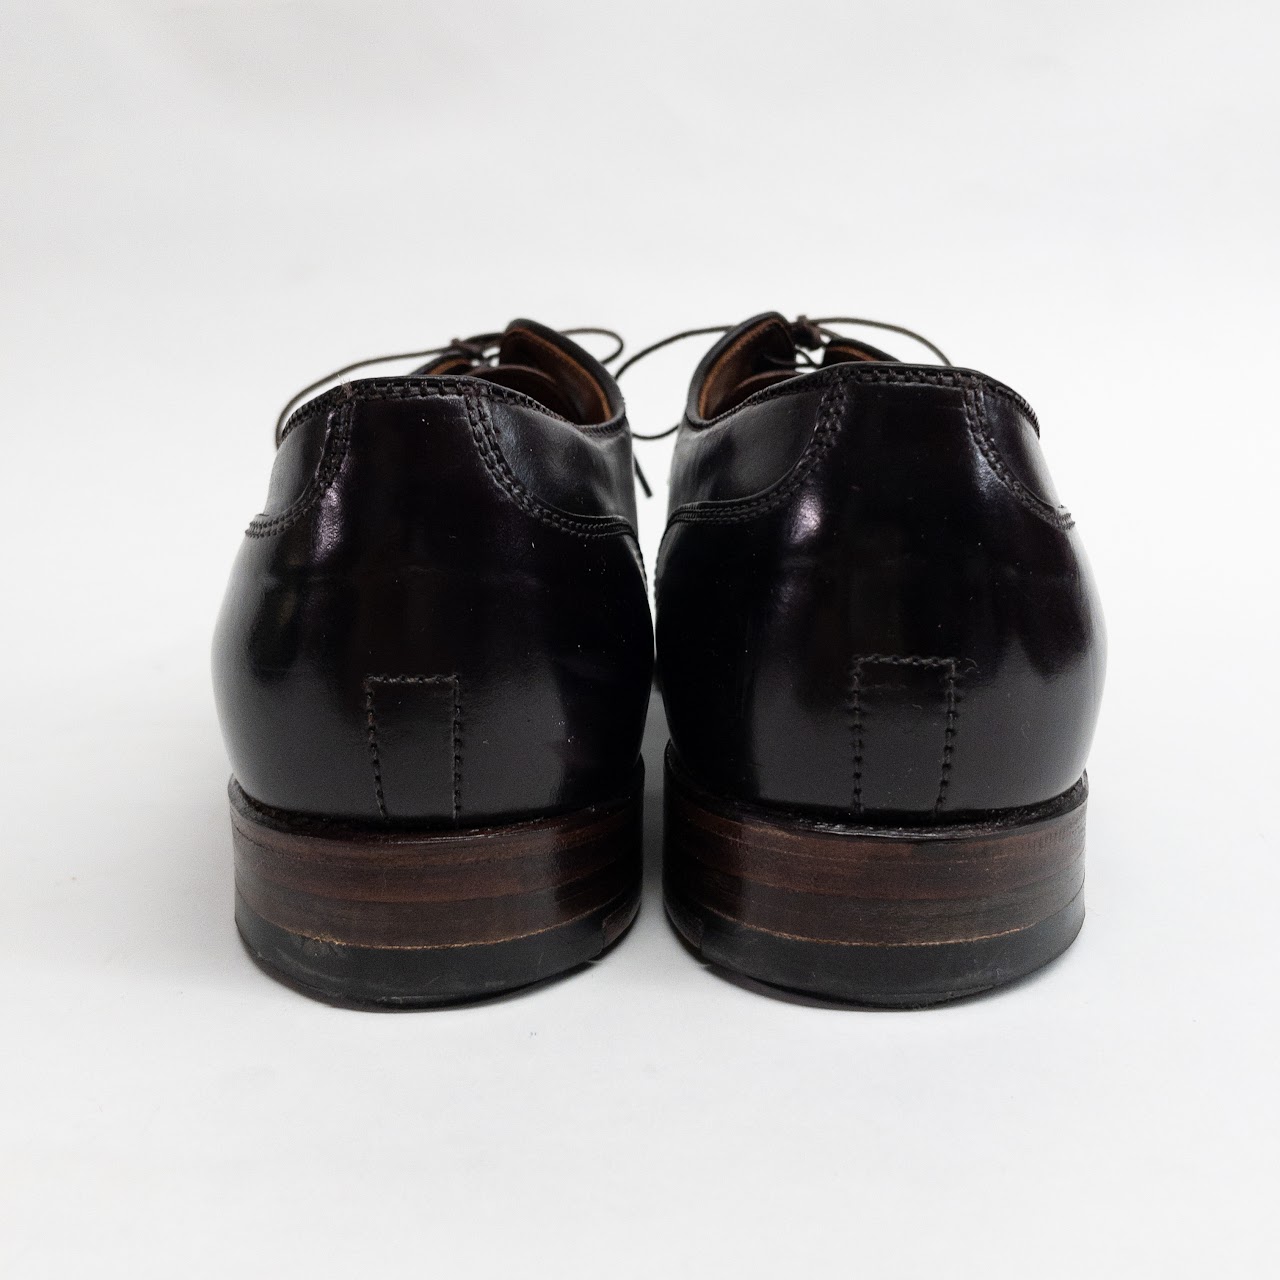 Alden New England Cordovan Oxford Shoes